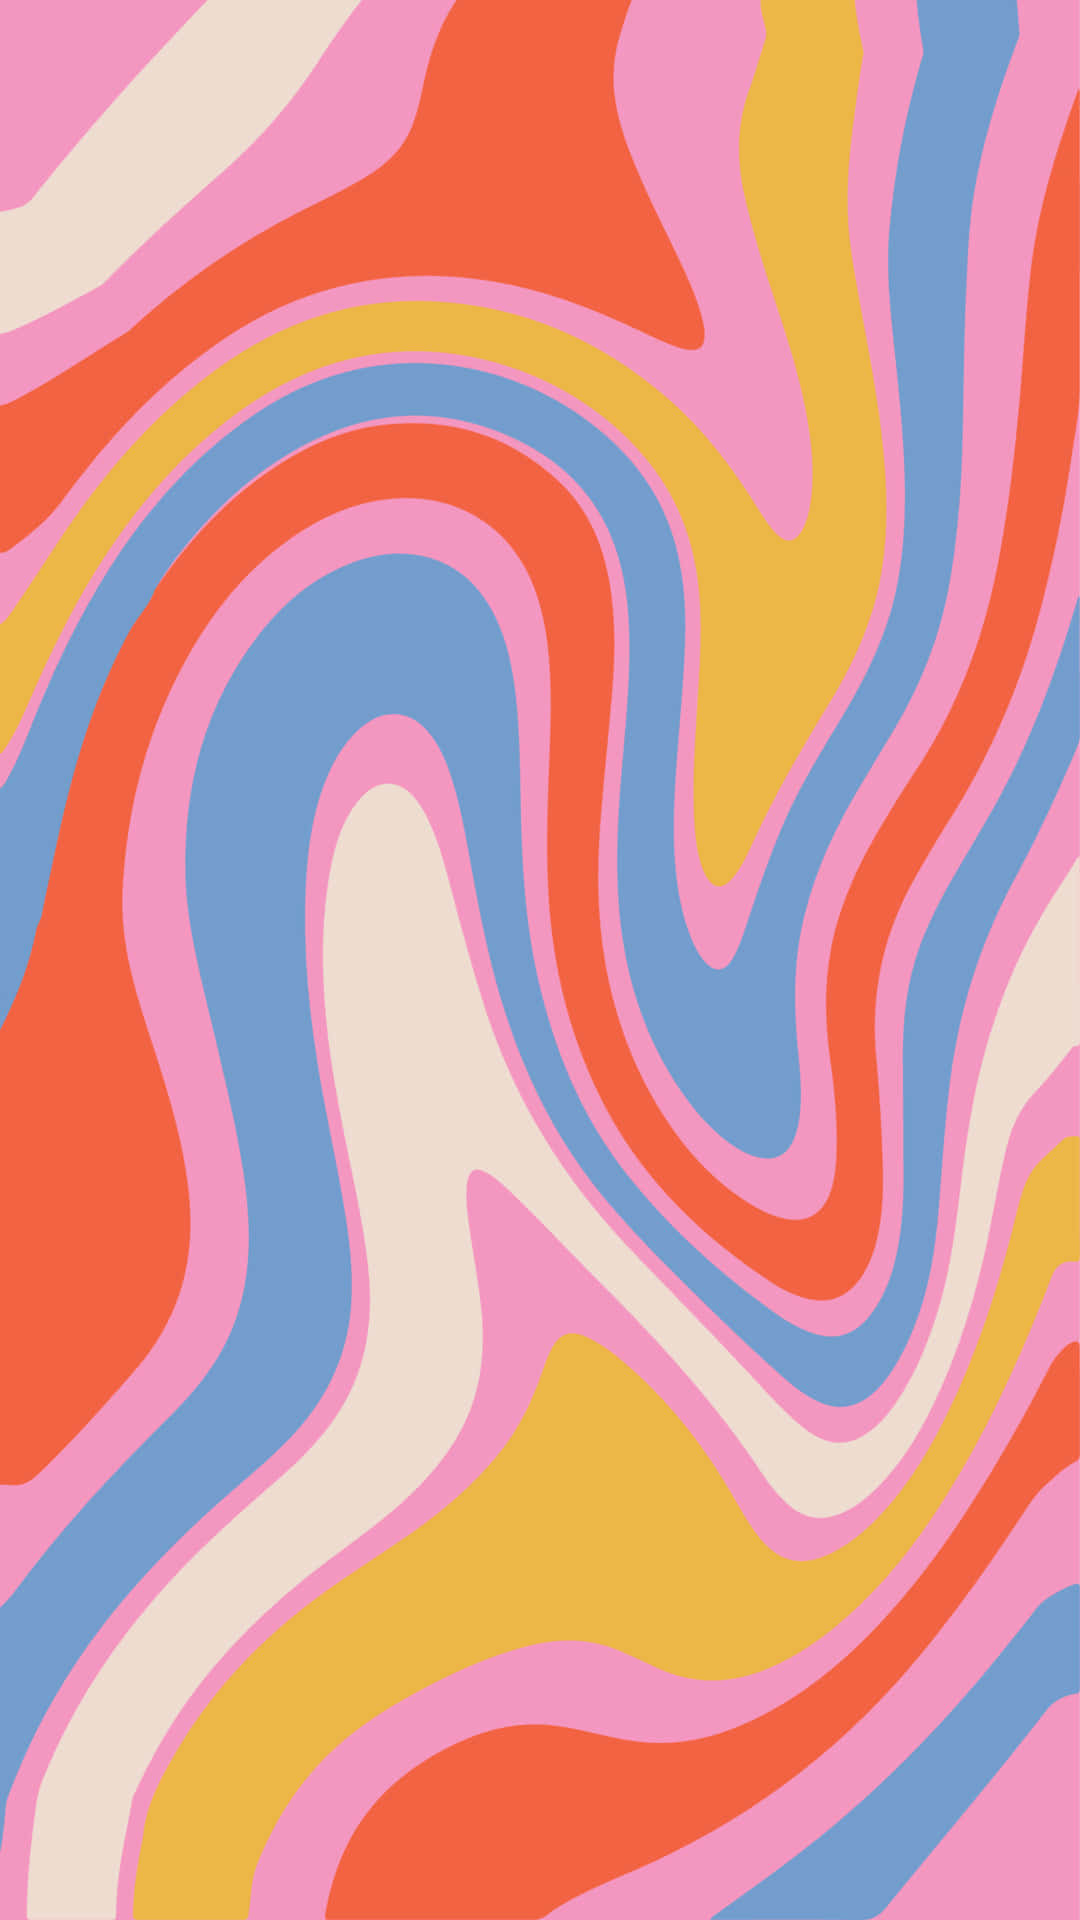 Groovy Abstract Swirls Vector Artwork Background